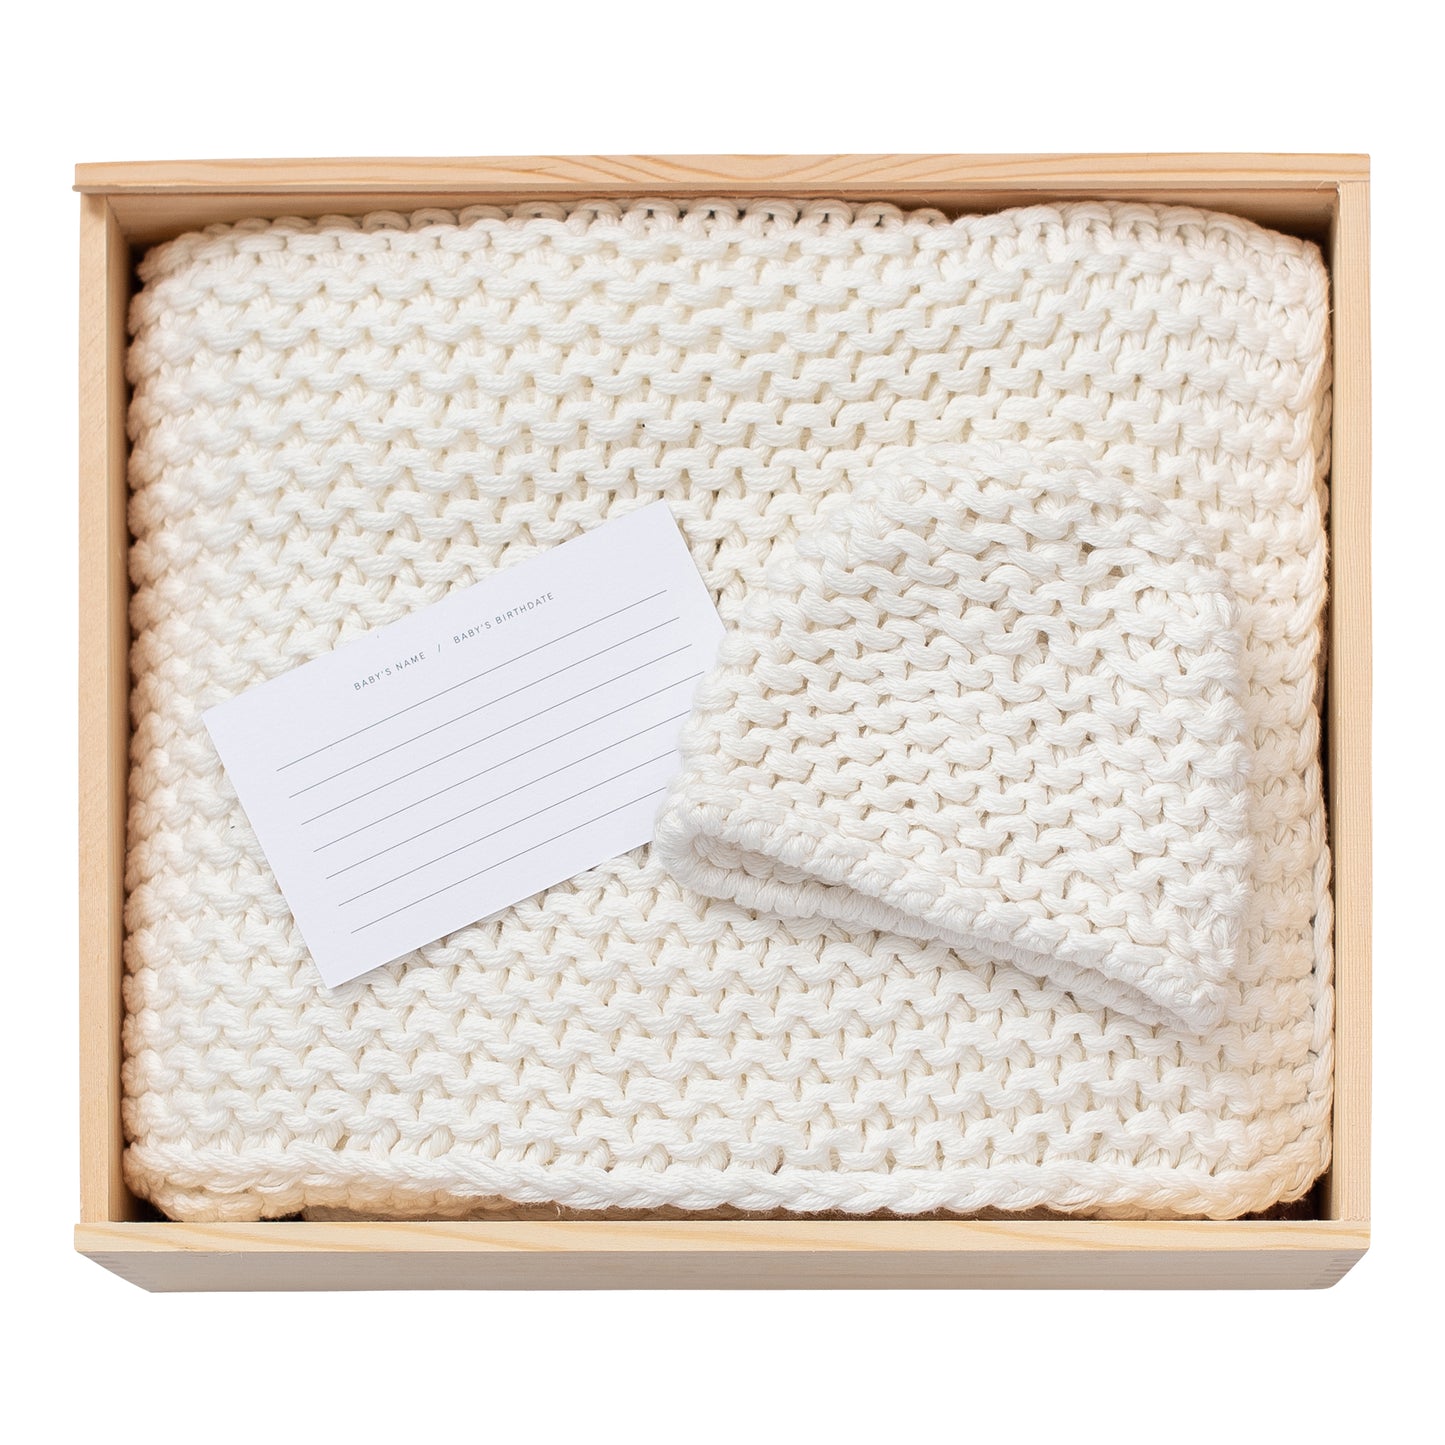 Zestt - Organic Cotton Baby Blanket & Hat Gift Set - White